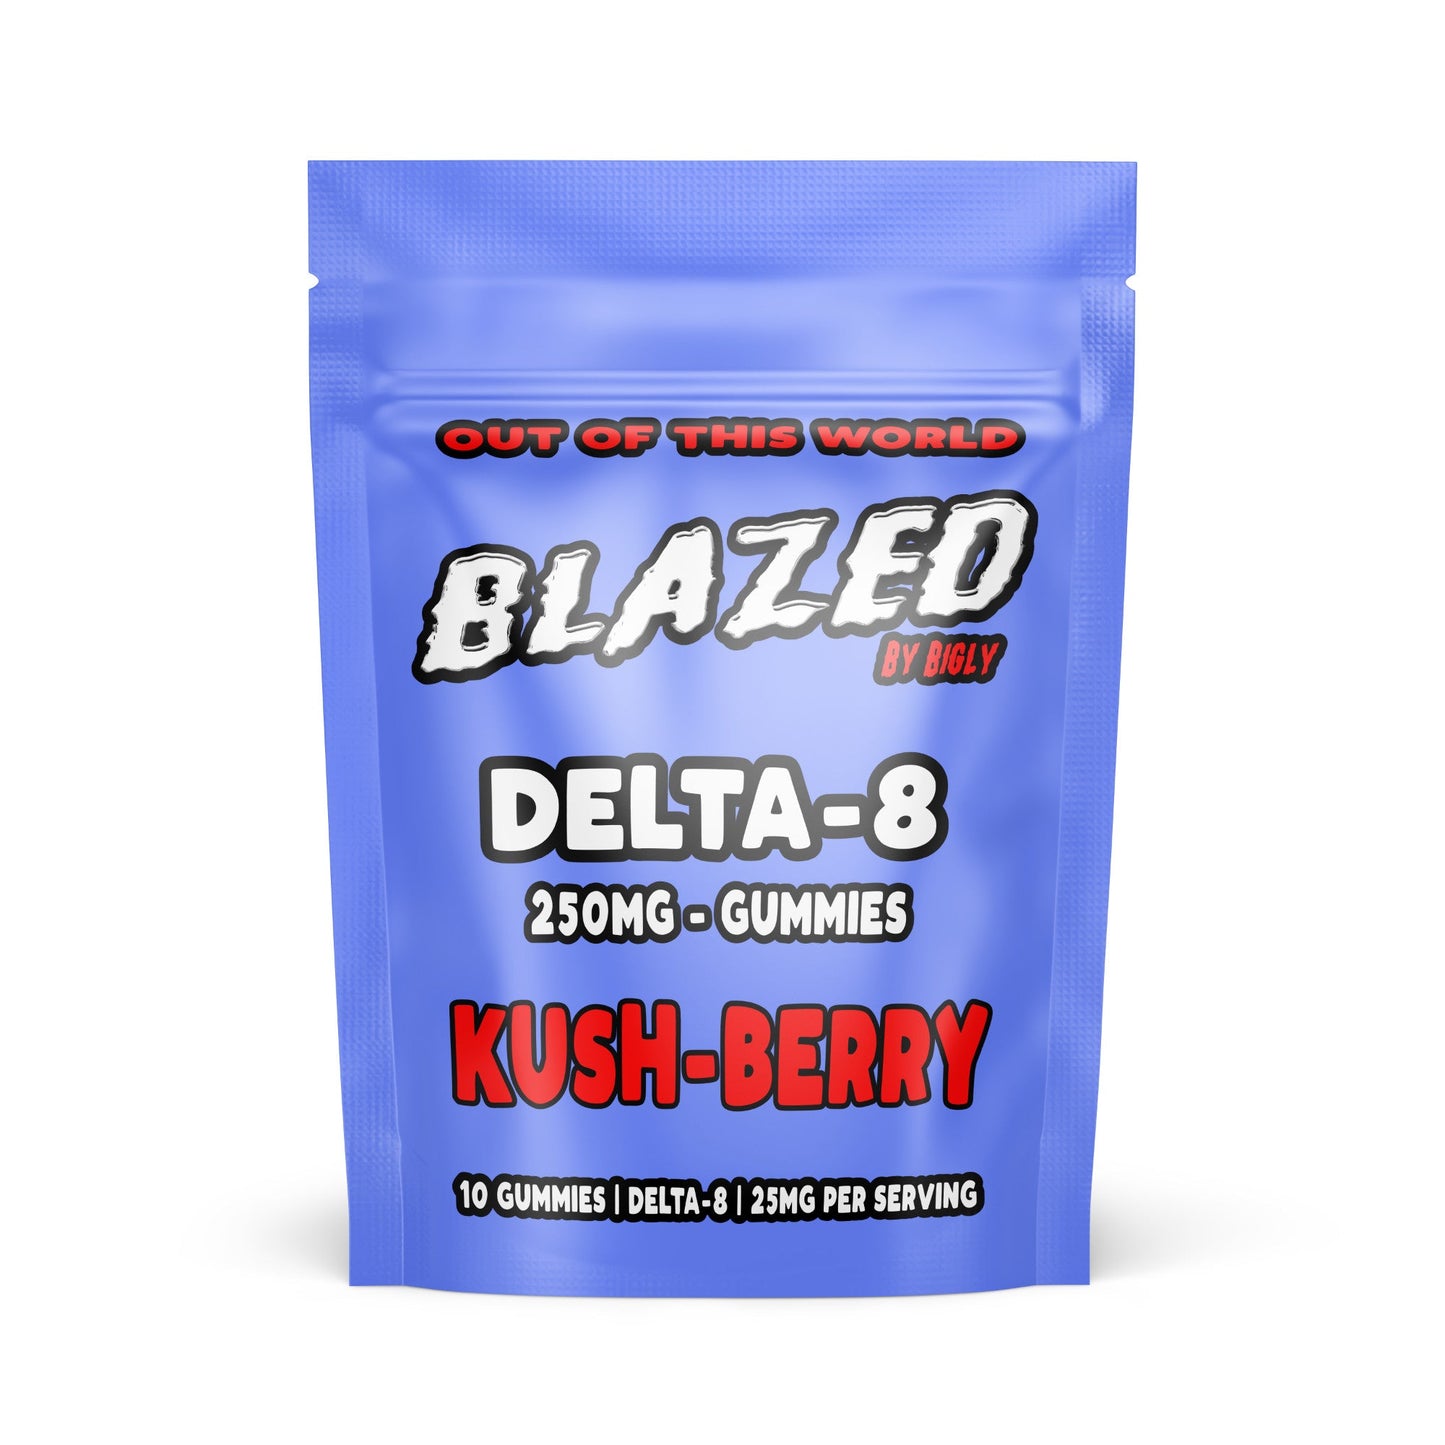 Blazed Hemp One Time Purchase Blazed Delta-8 Kush Berry Gummies